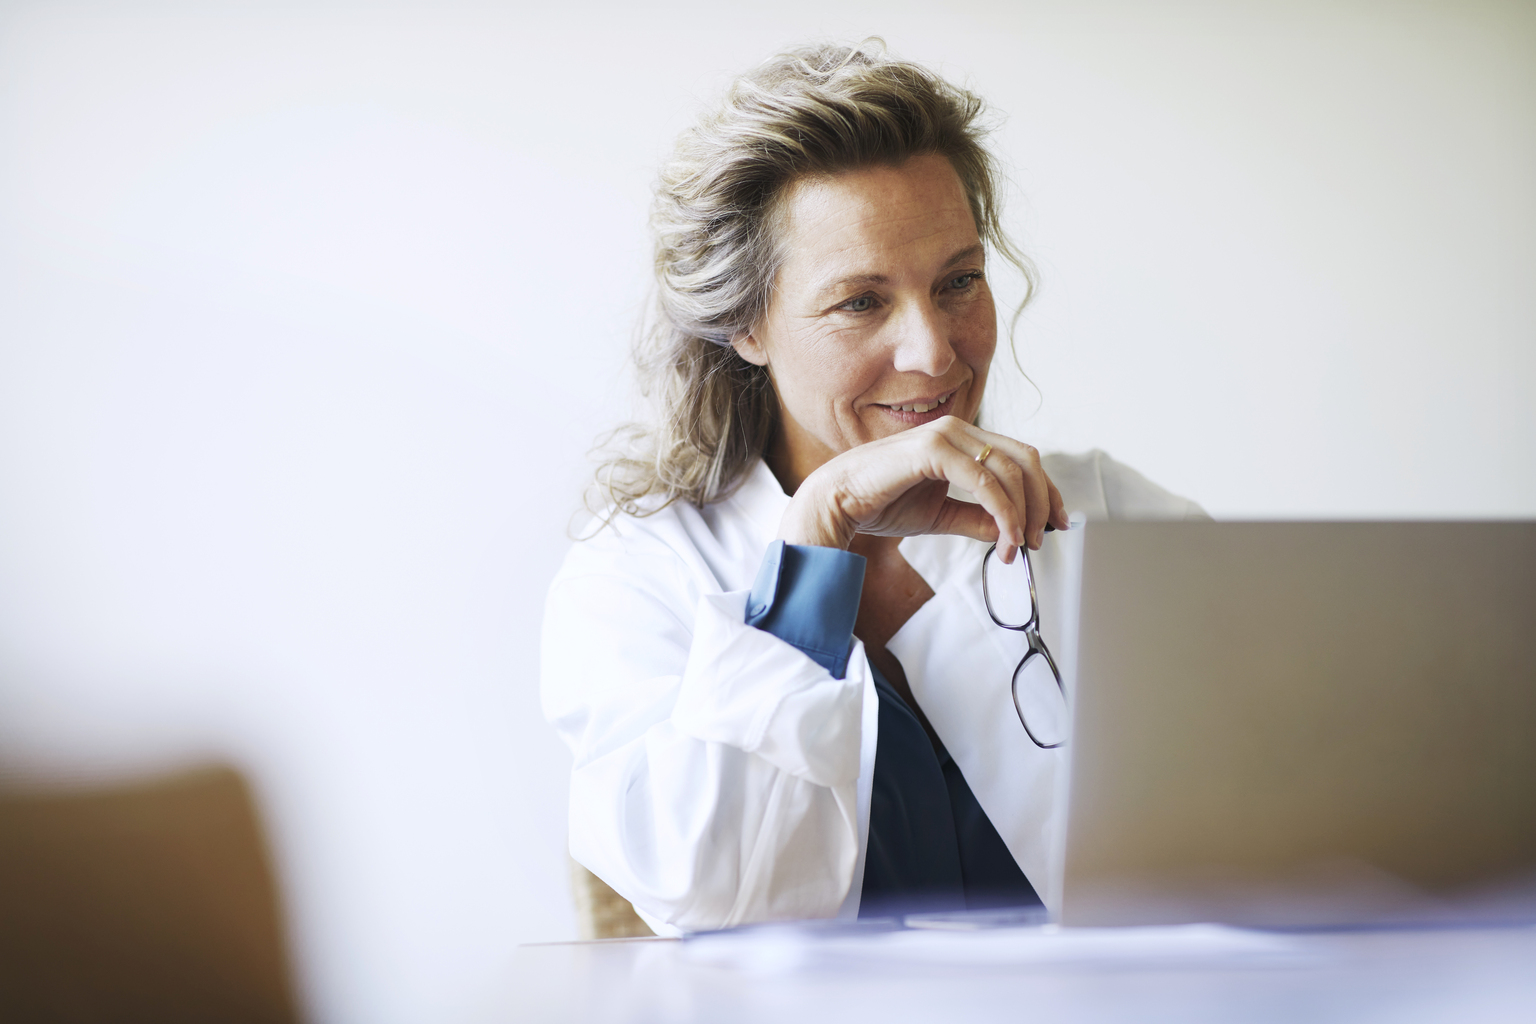 Female doctor using laptop